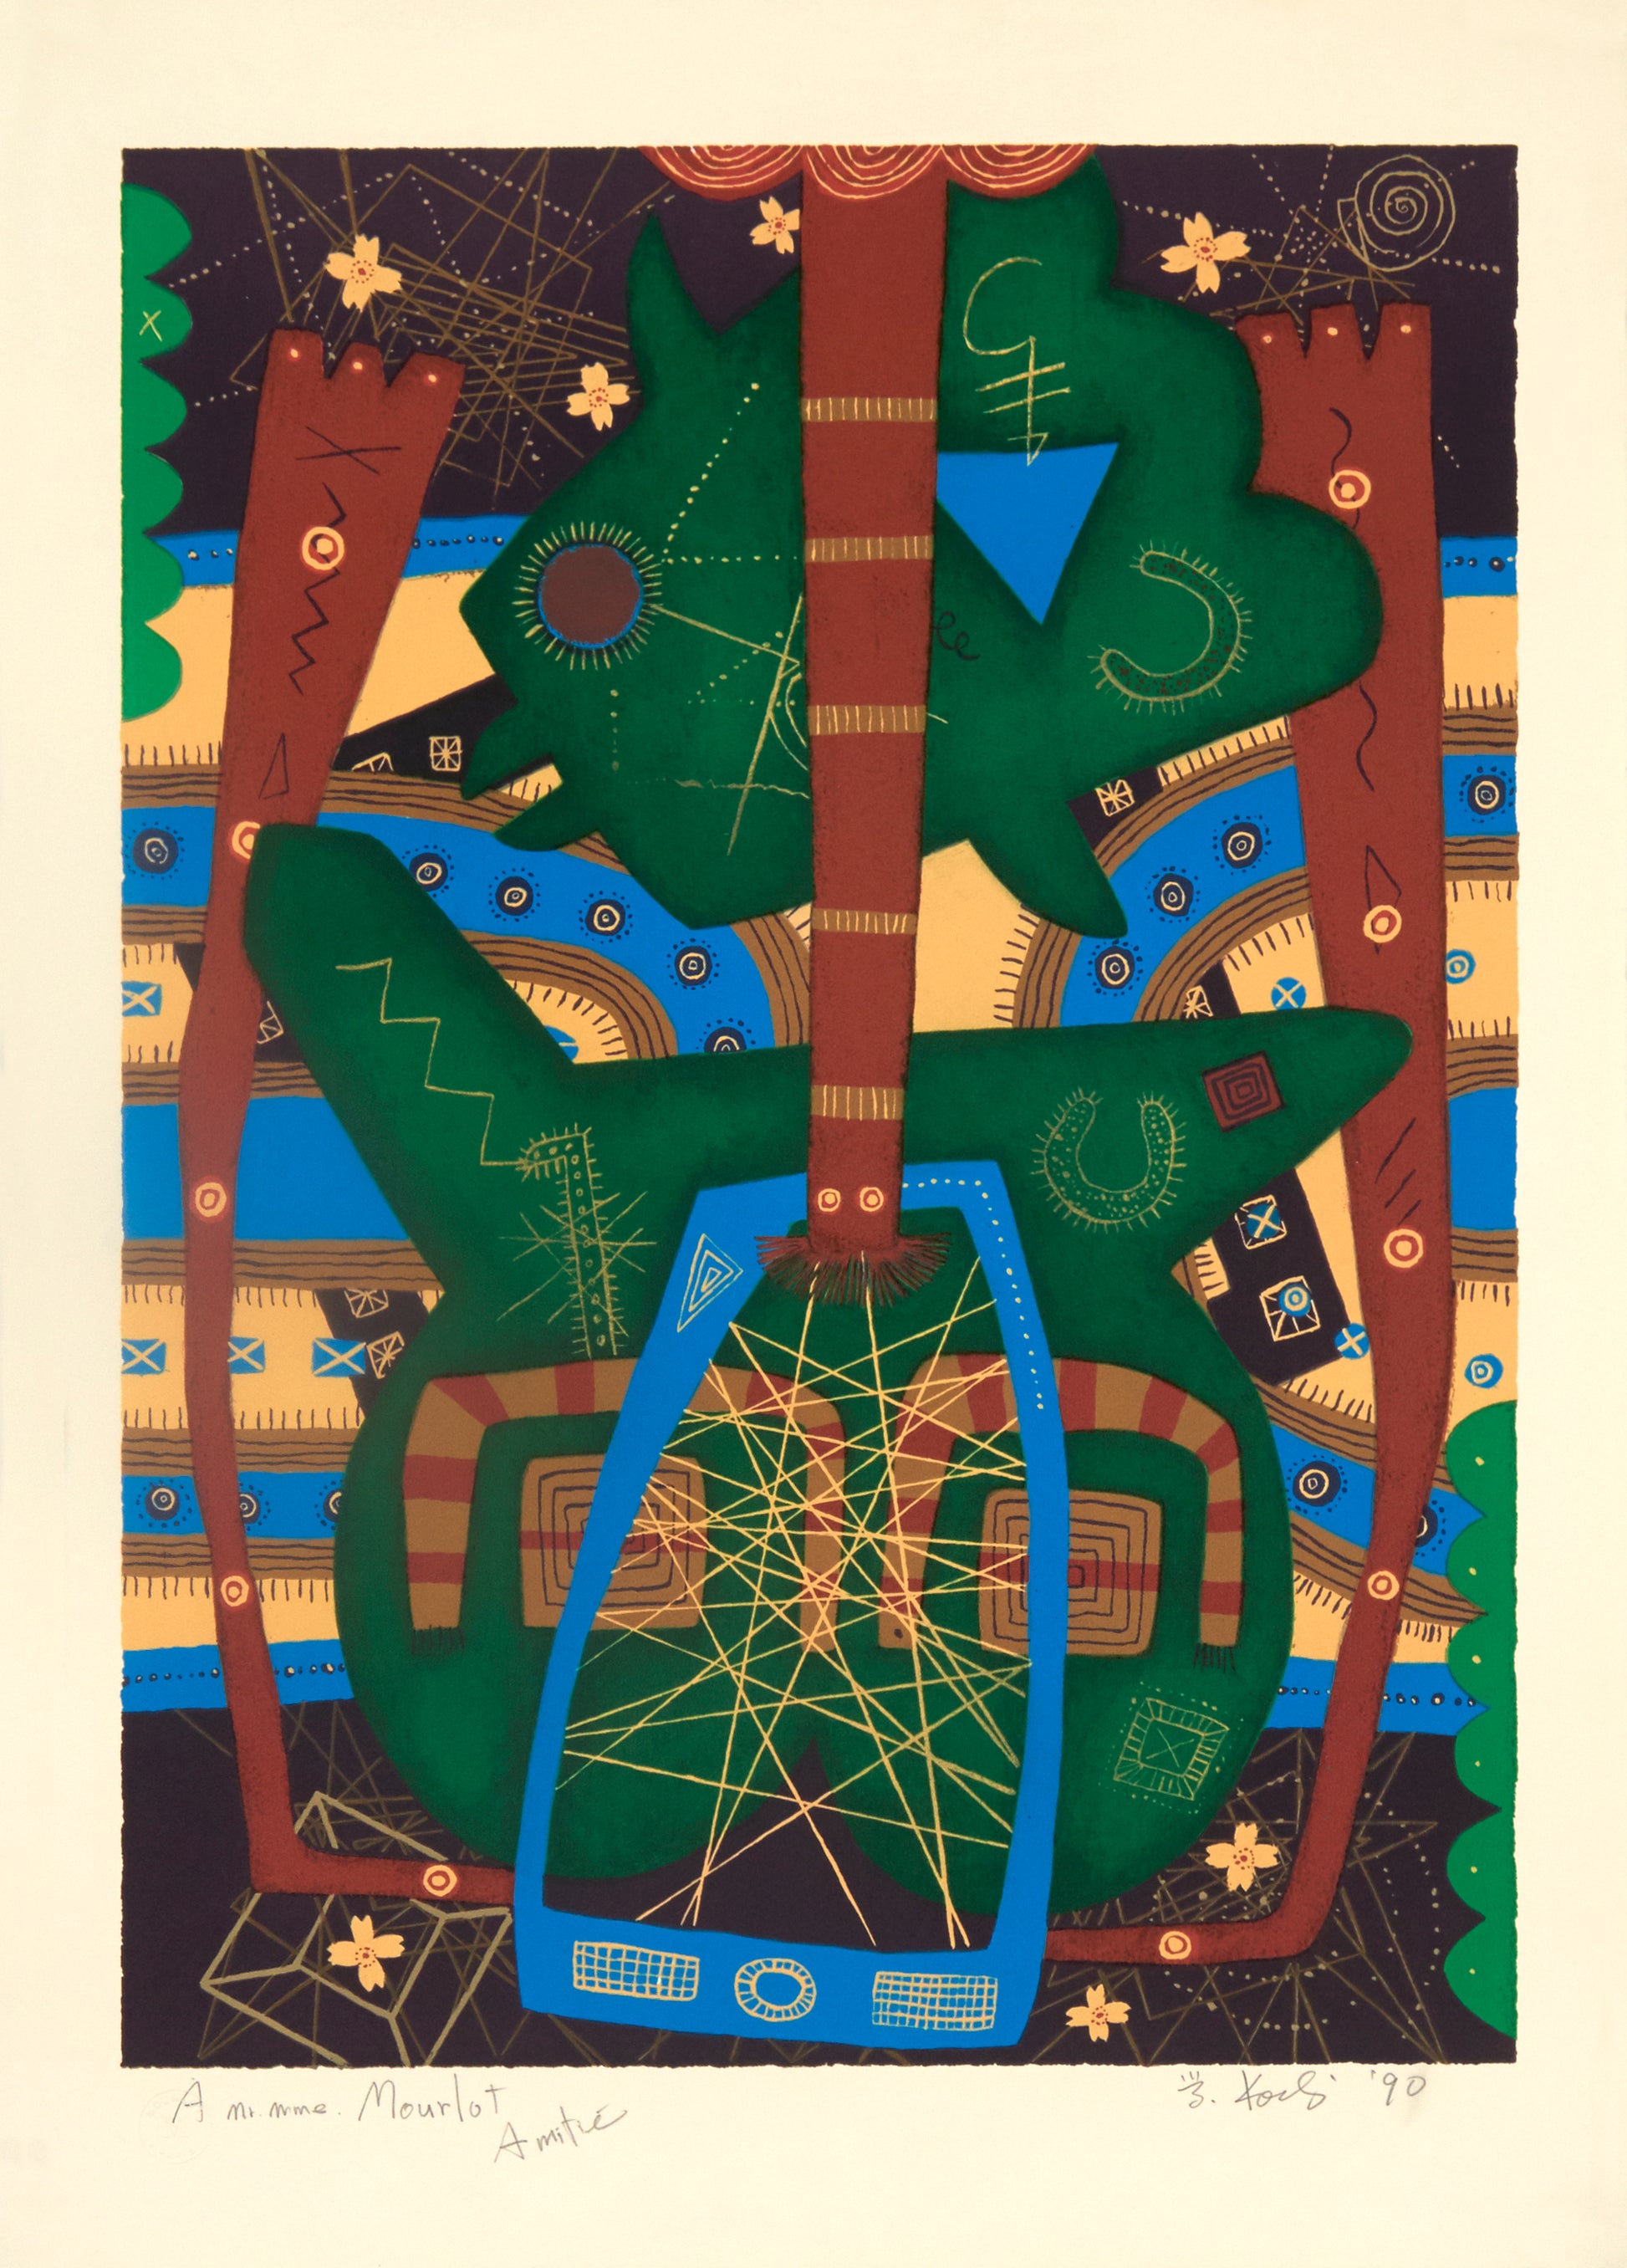 La Mangrove by Manabu Kochi - Mourlot Editions - Fine_Art - Poster - Lithograph - Wall Art - Vintage - Prints - Original